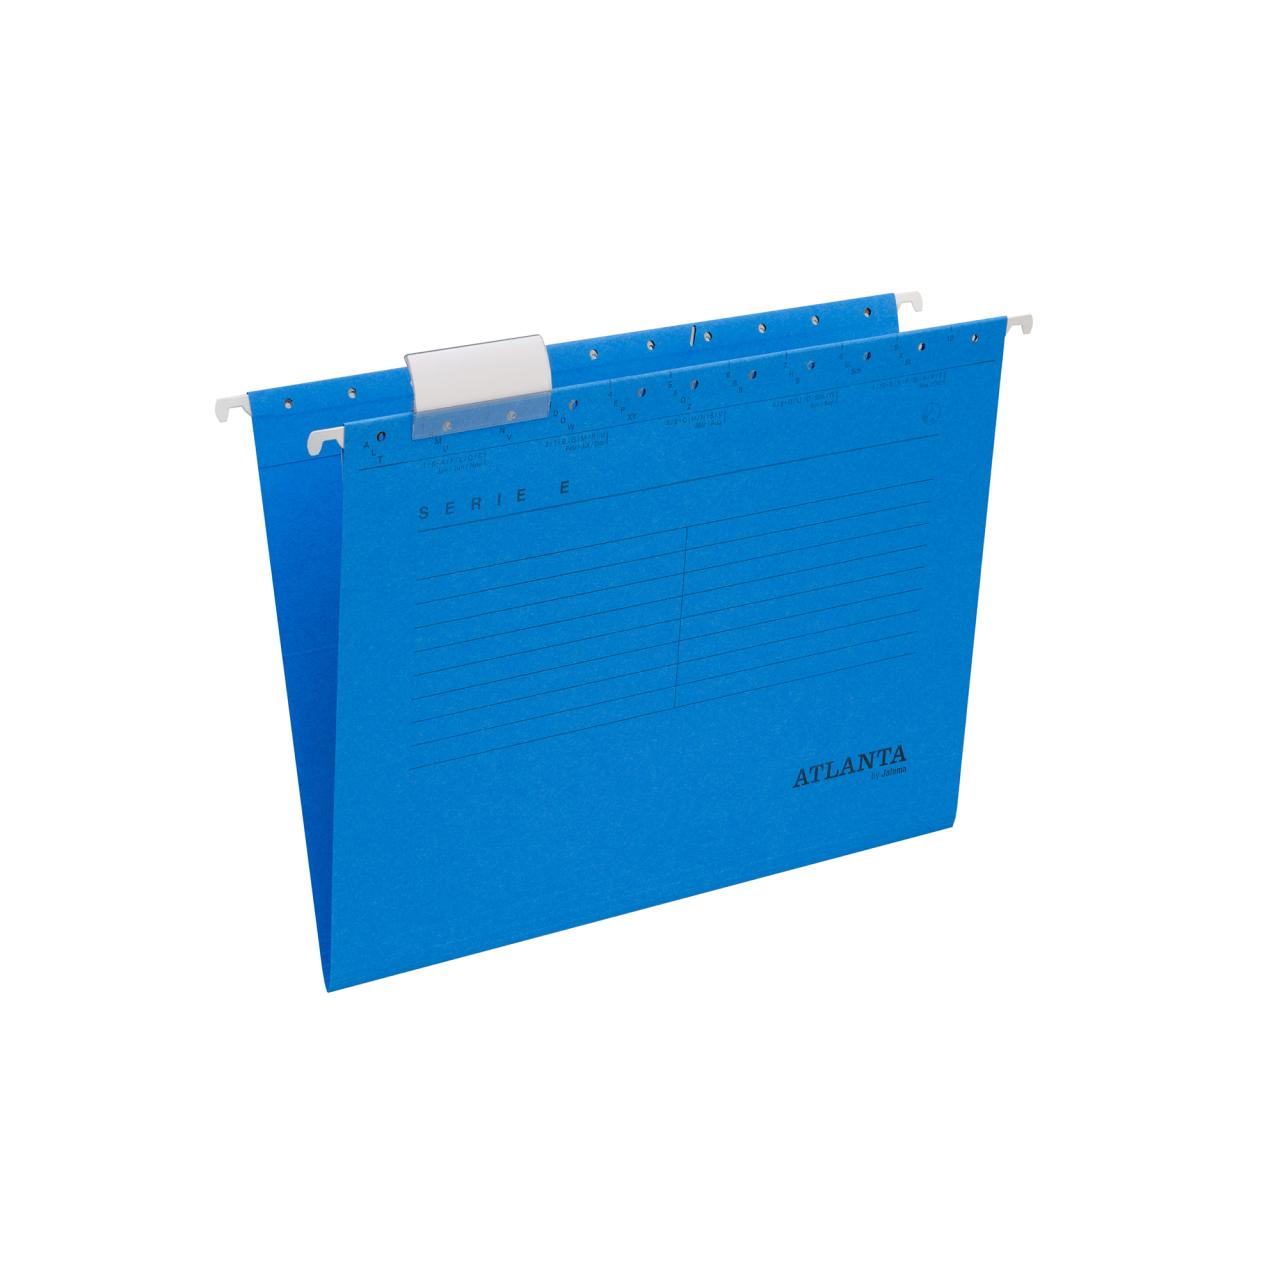 Serie-E Suspension File, 40 mm, A4, 100% recycled cardboard, FSC®